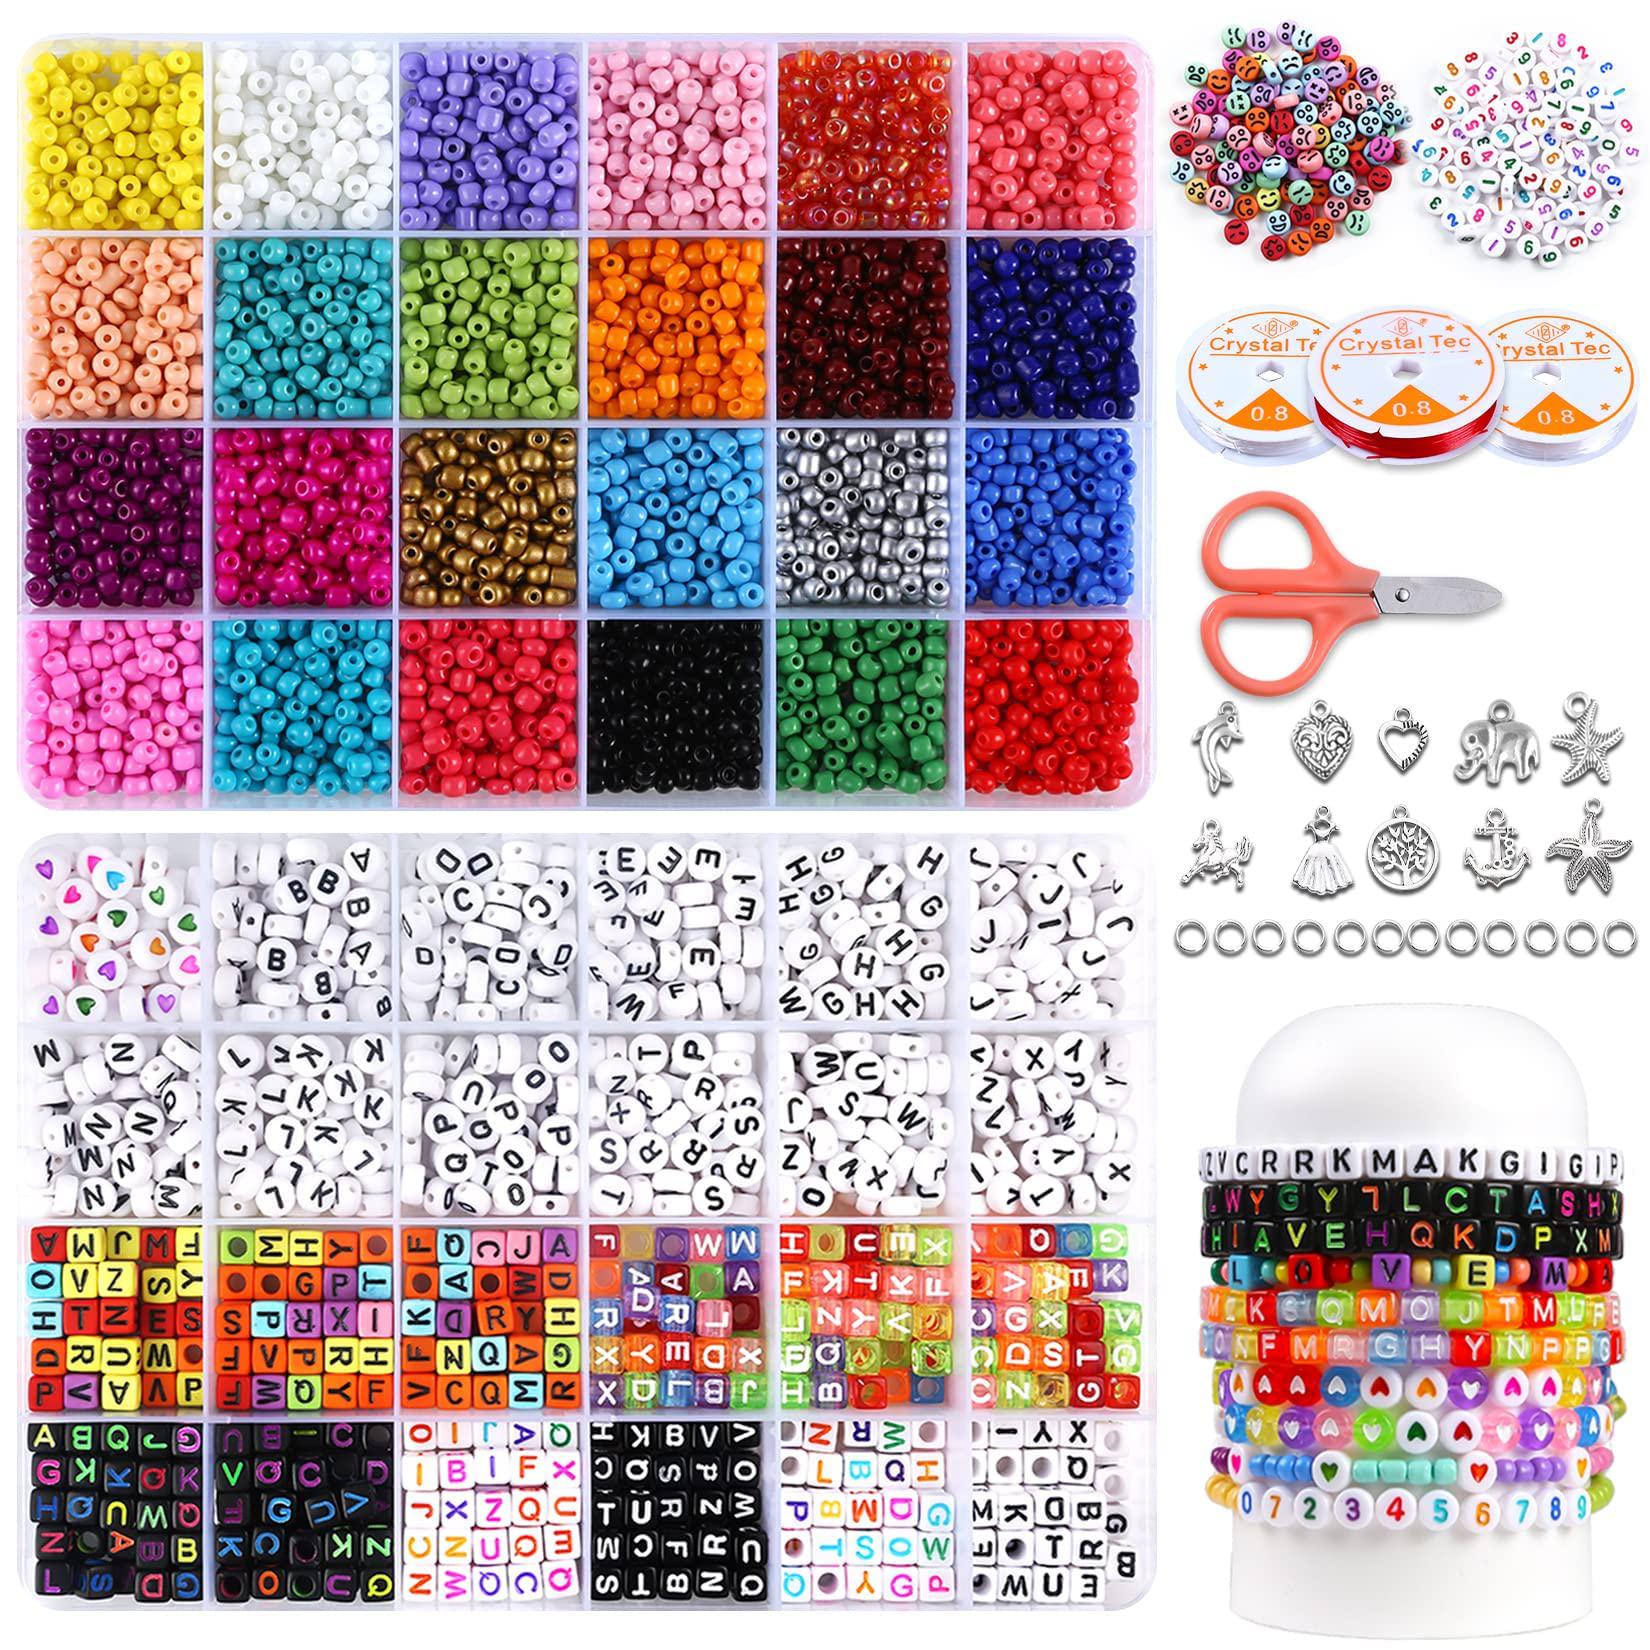 blingfun bead bracelet making kit,3800pcs 4mm glass seed beads